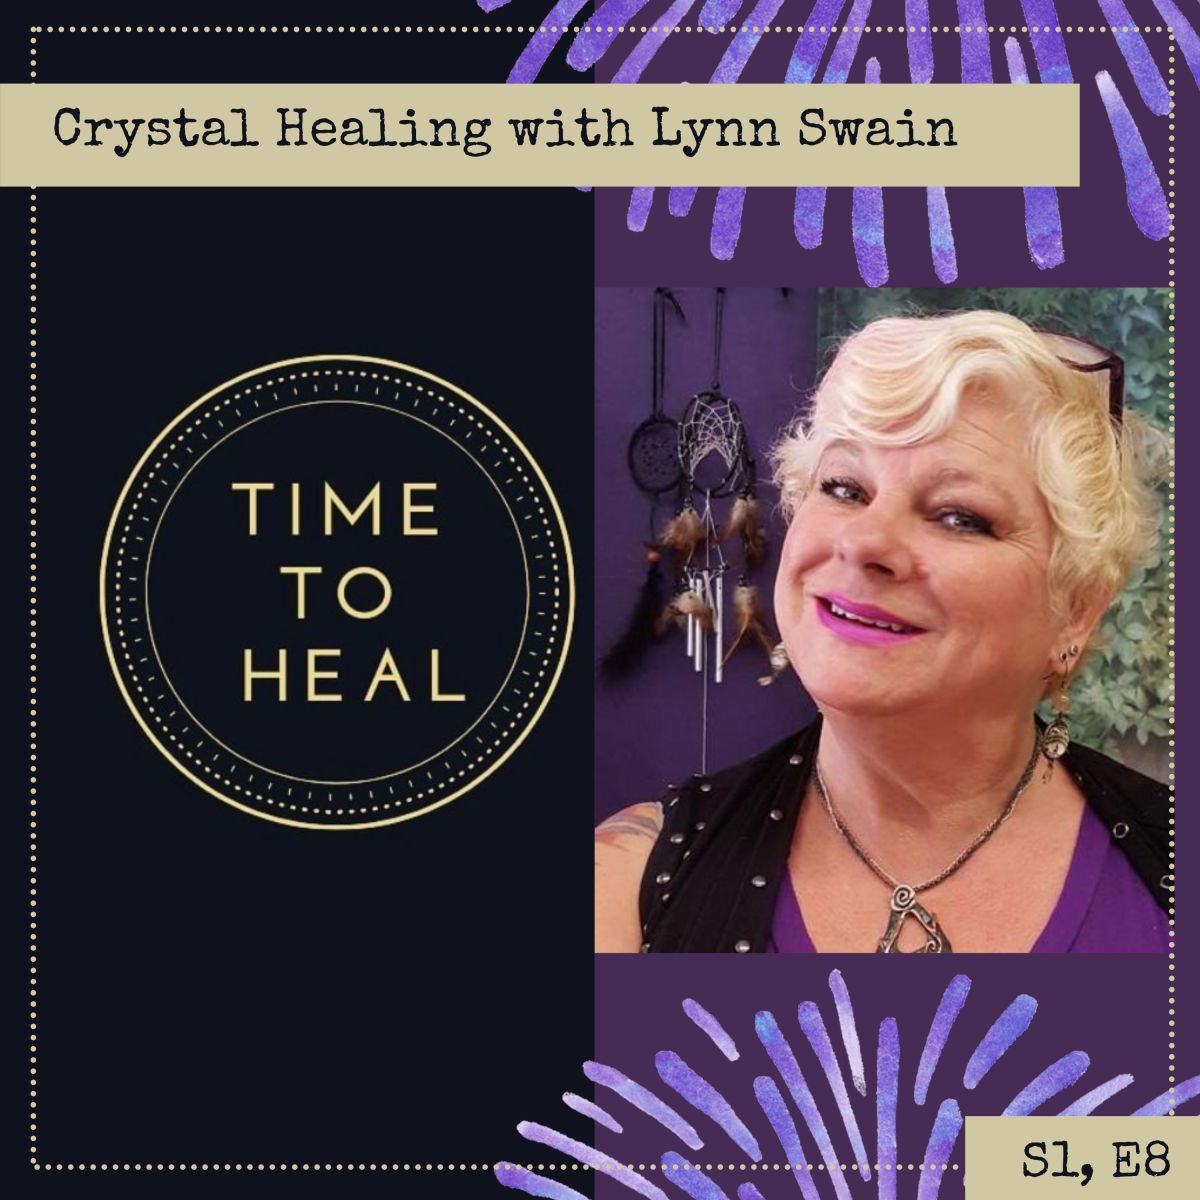 Crystal Healing with Lynn Swain